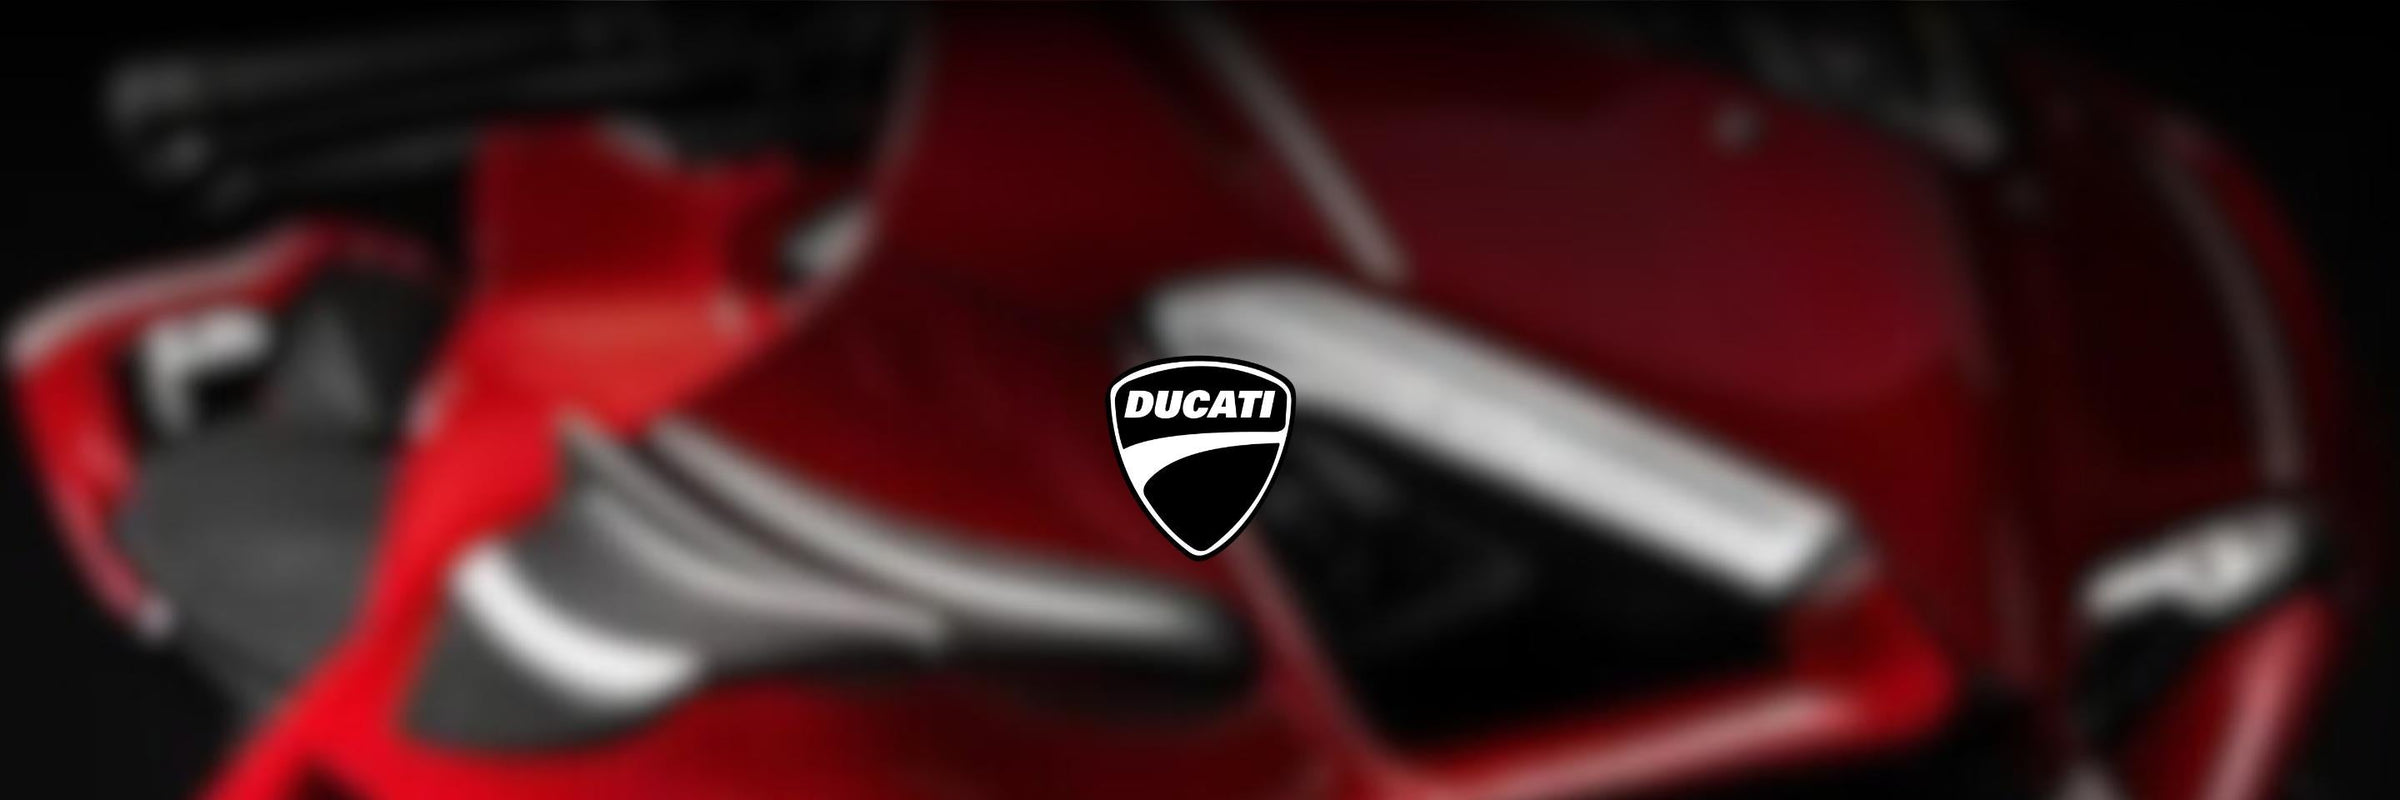 Ducati x New Era Caps - F1 and Motorpsort Offficial Merchandise - Fueler store